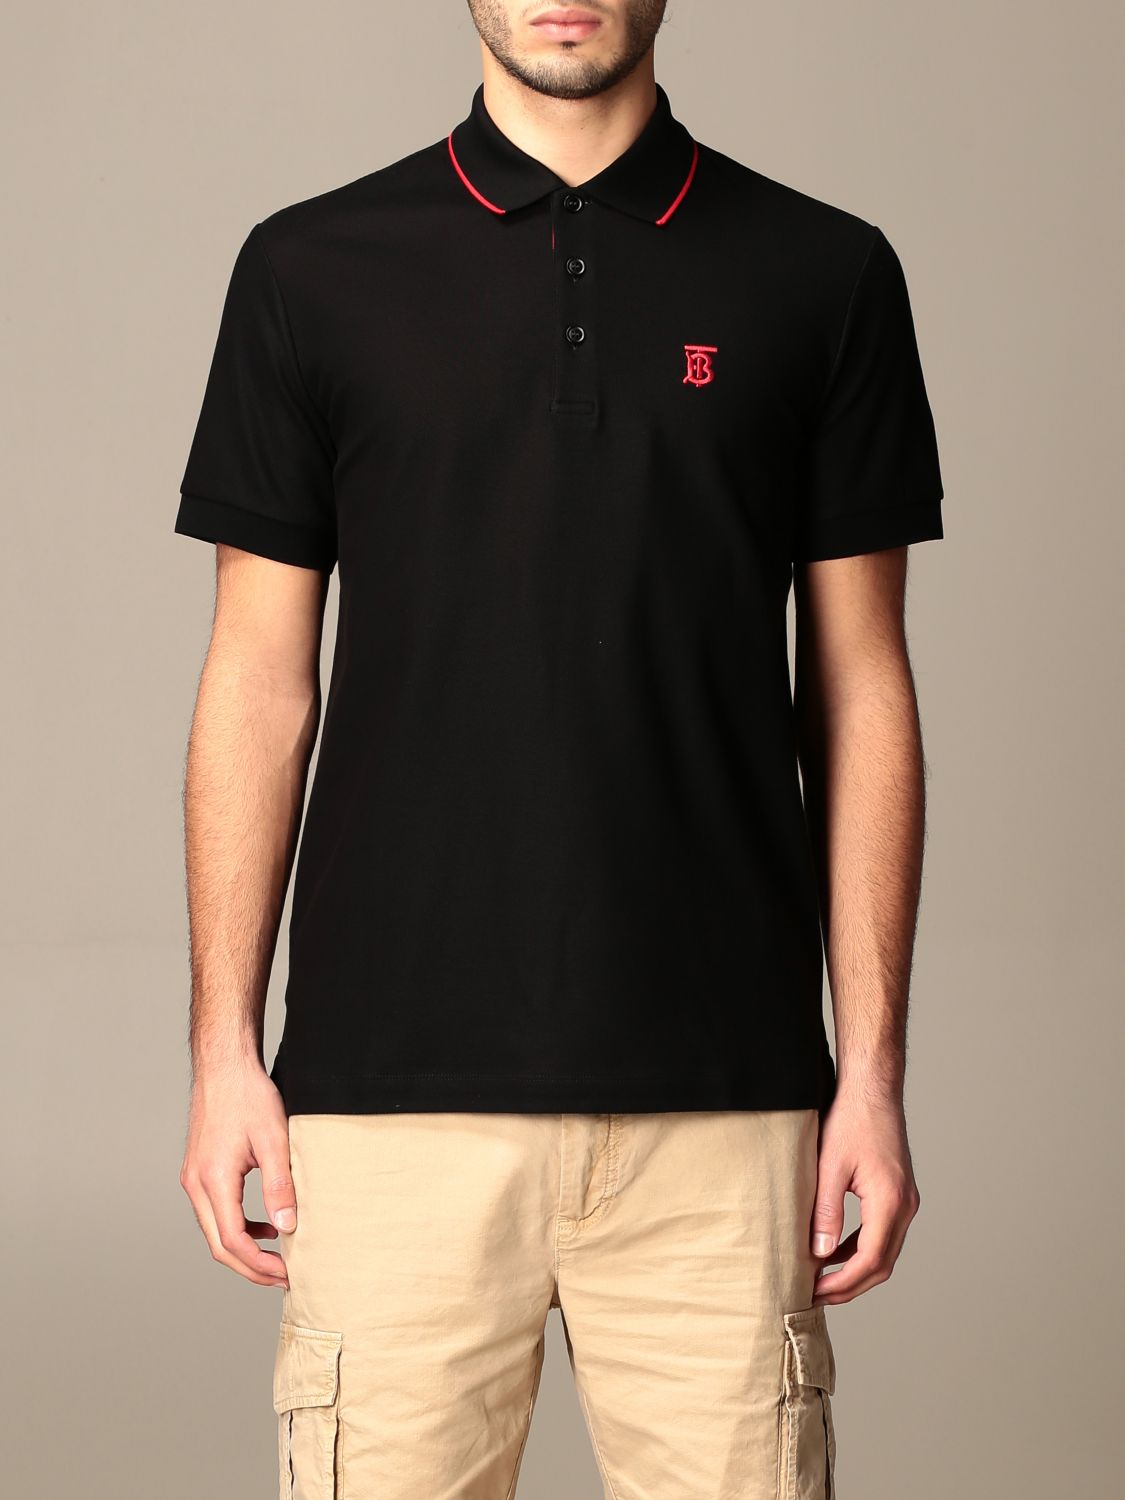 BURBERRY: Walton polo shirt with TB logo - Black | Burberry polo shirt 8017003 online at GIGLIO.COM